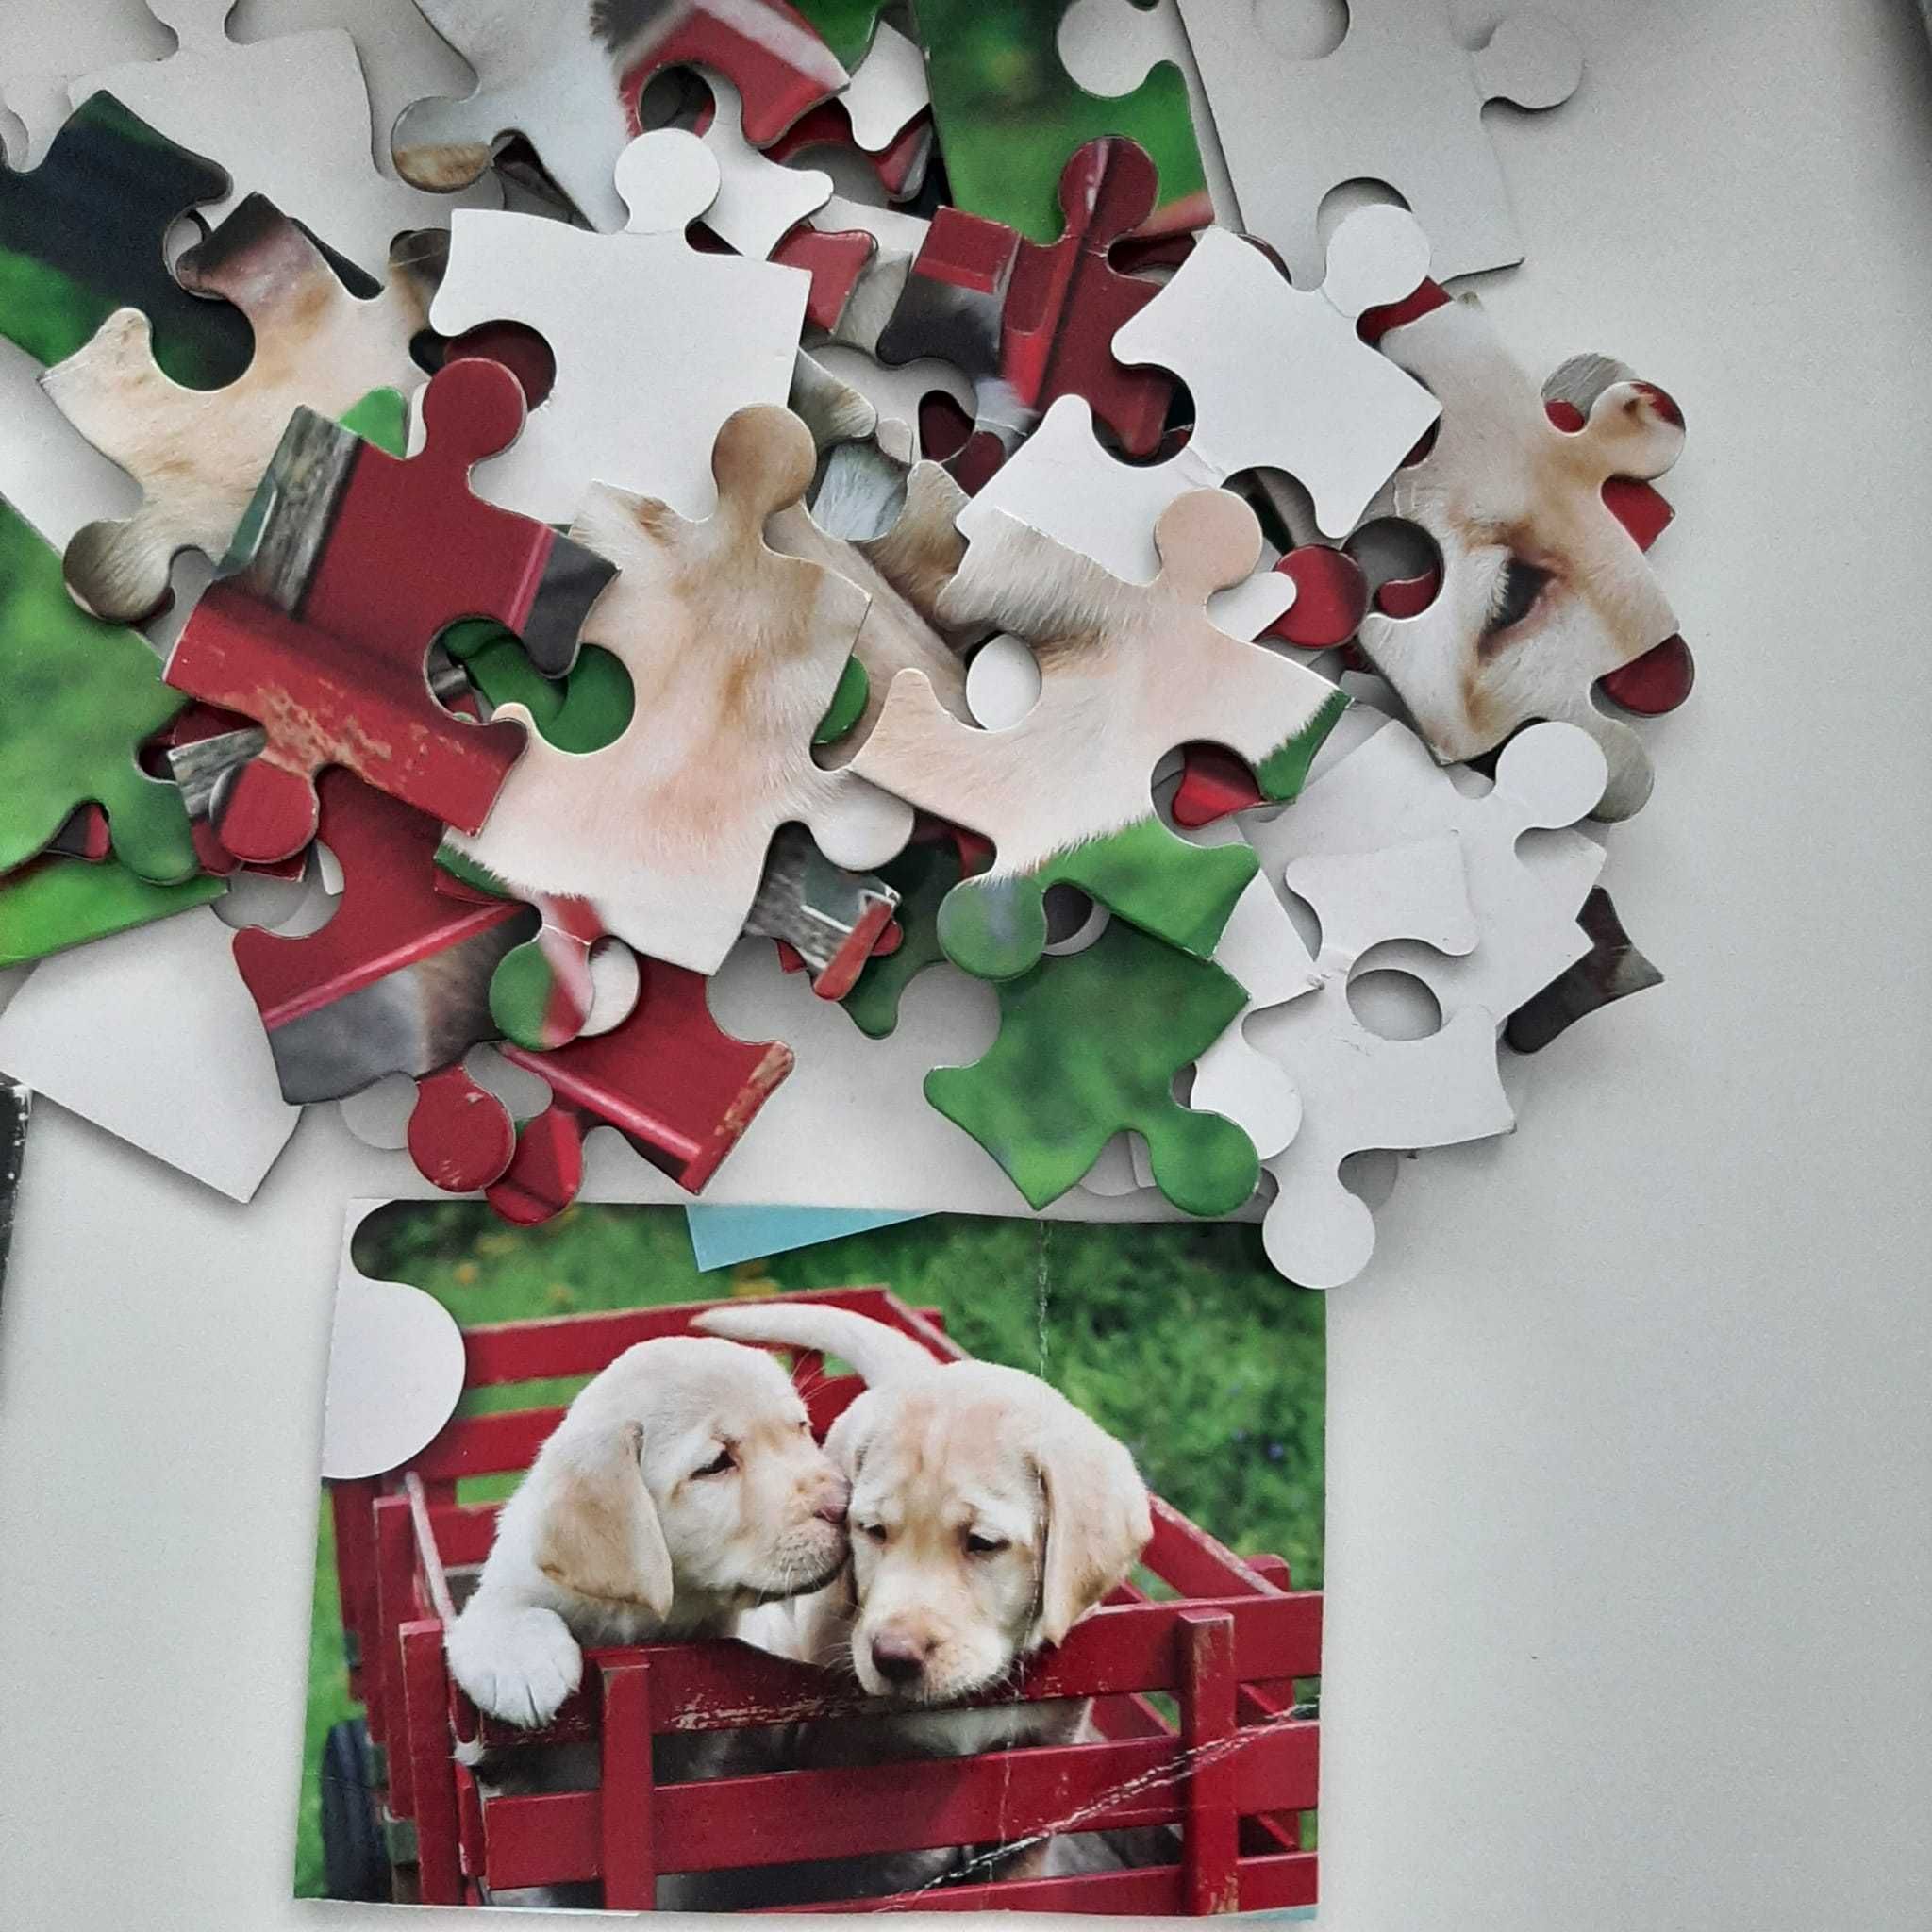 7 Puzzle pentru copii - in stare buna, fara ambalajul original